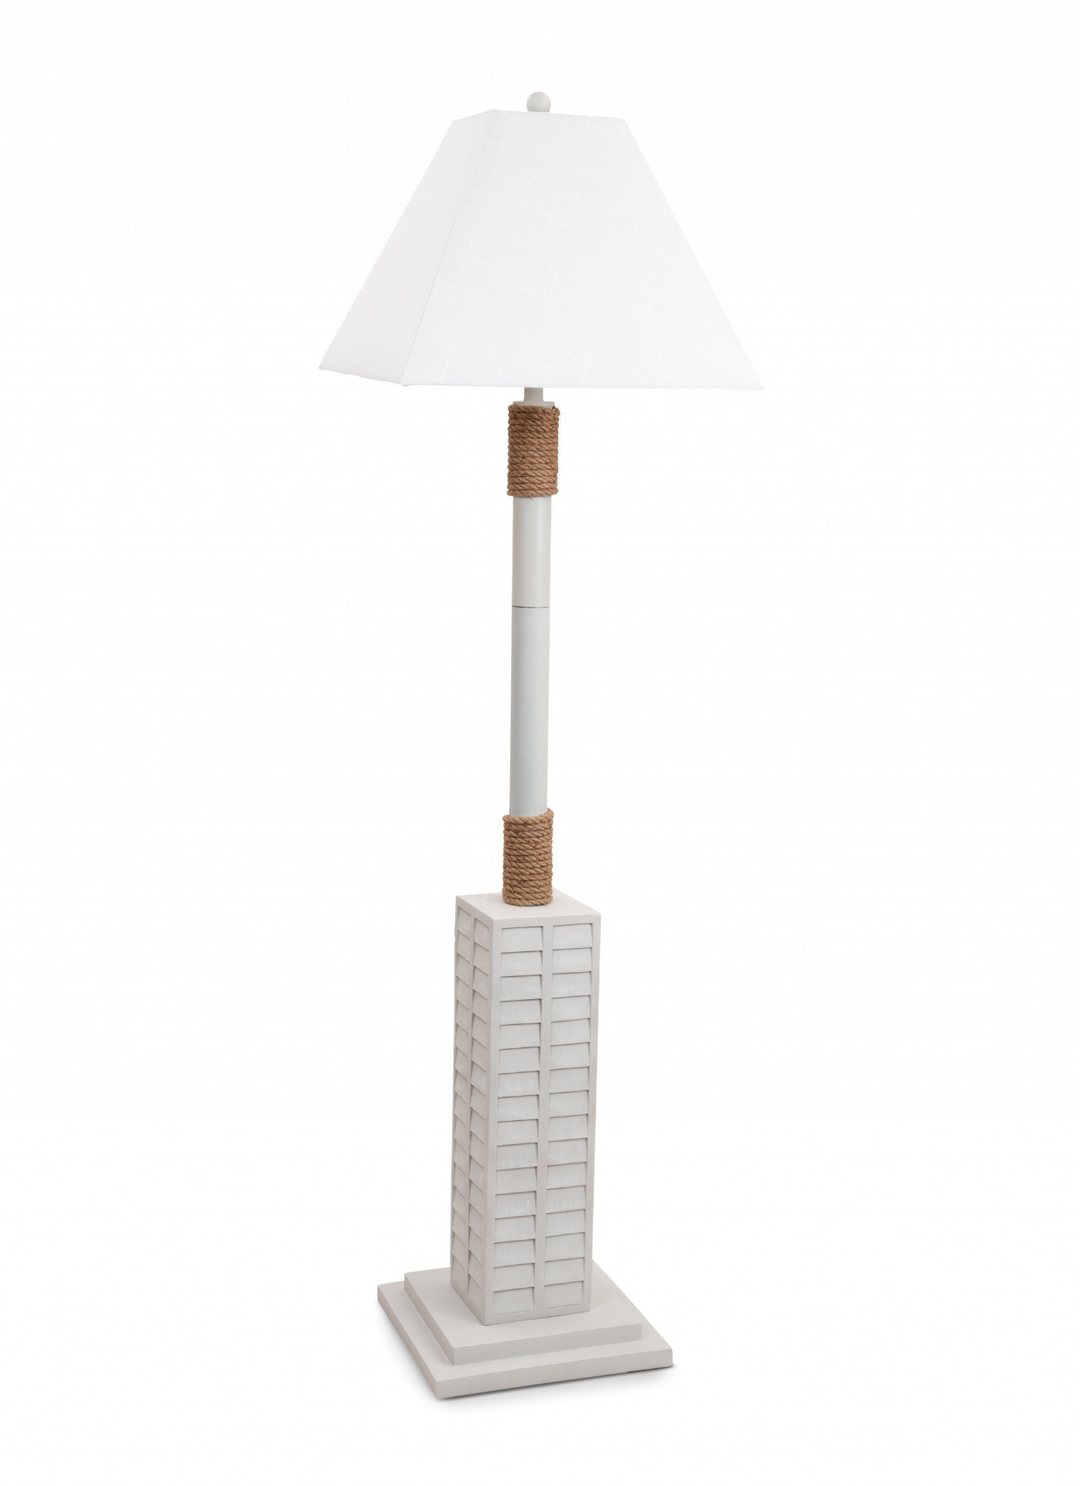 Boho Aesthetic Classic Bright White and Nautical Rope Floor Lamp | Biophilic Design Airbnb Decor Furniture 